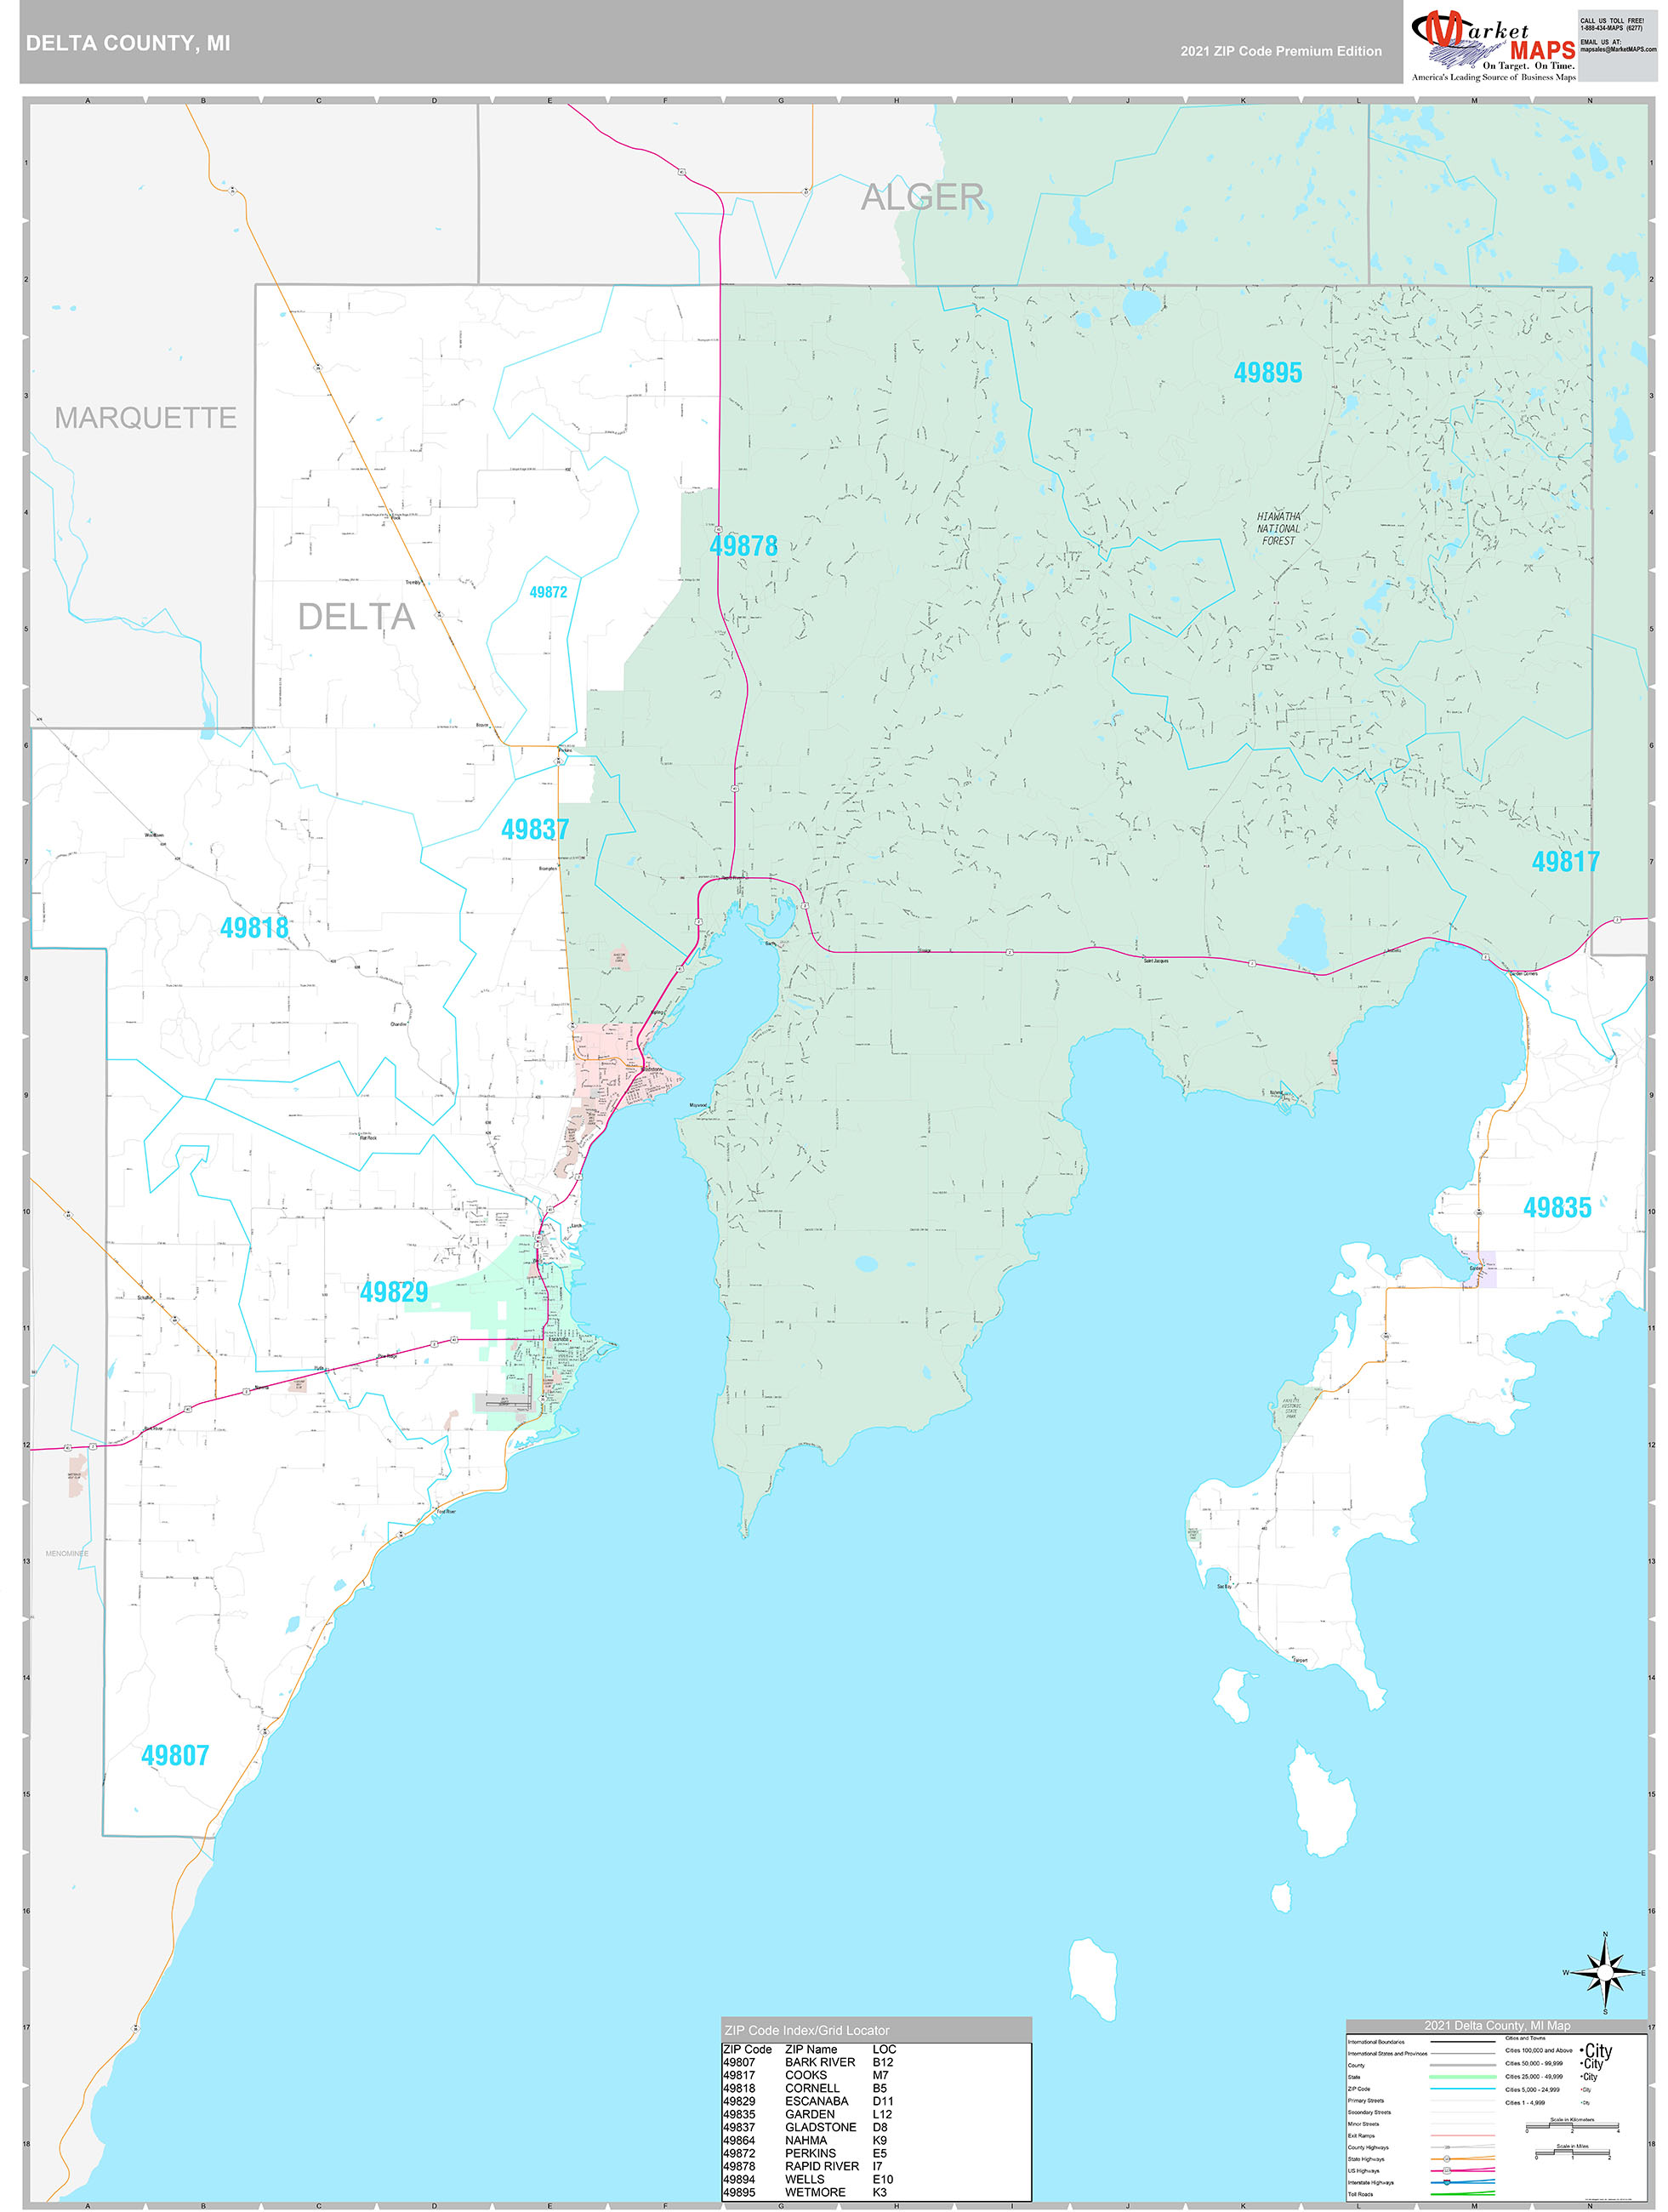 Delta County Mi Wall Map Premium Style By Marketmaps 7394